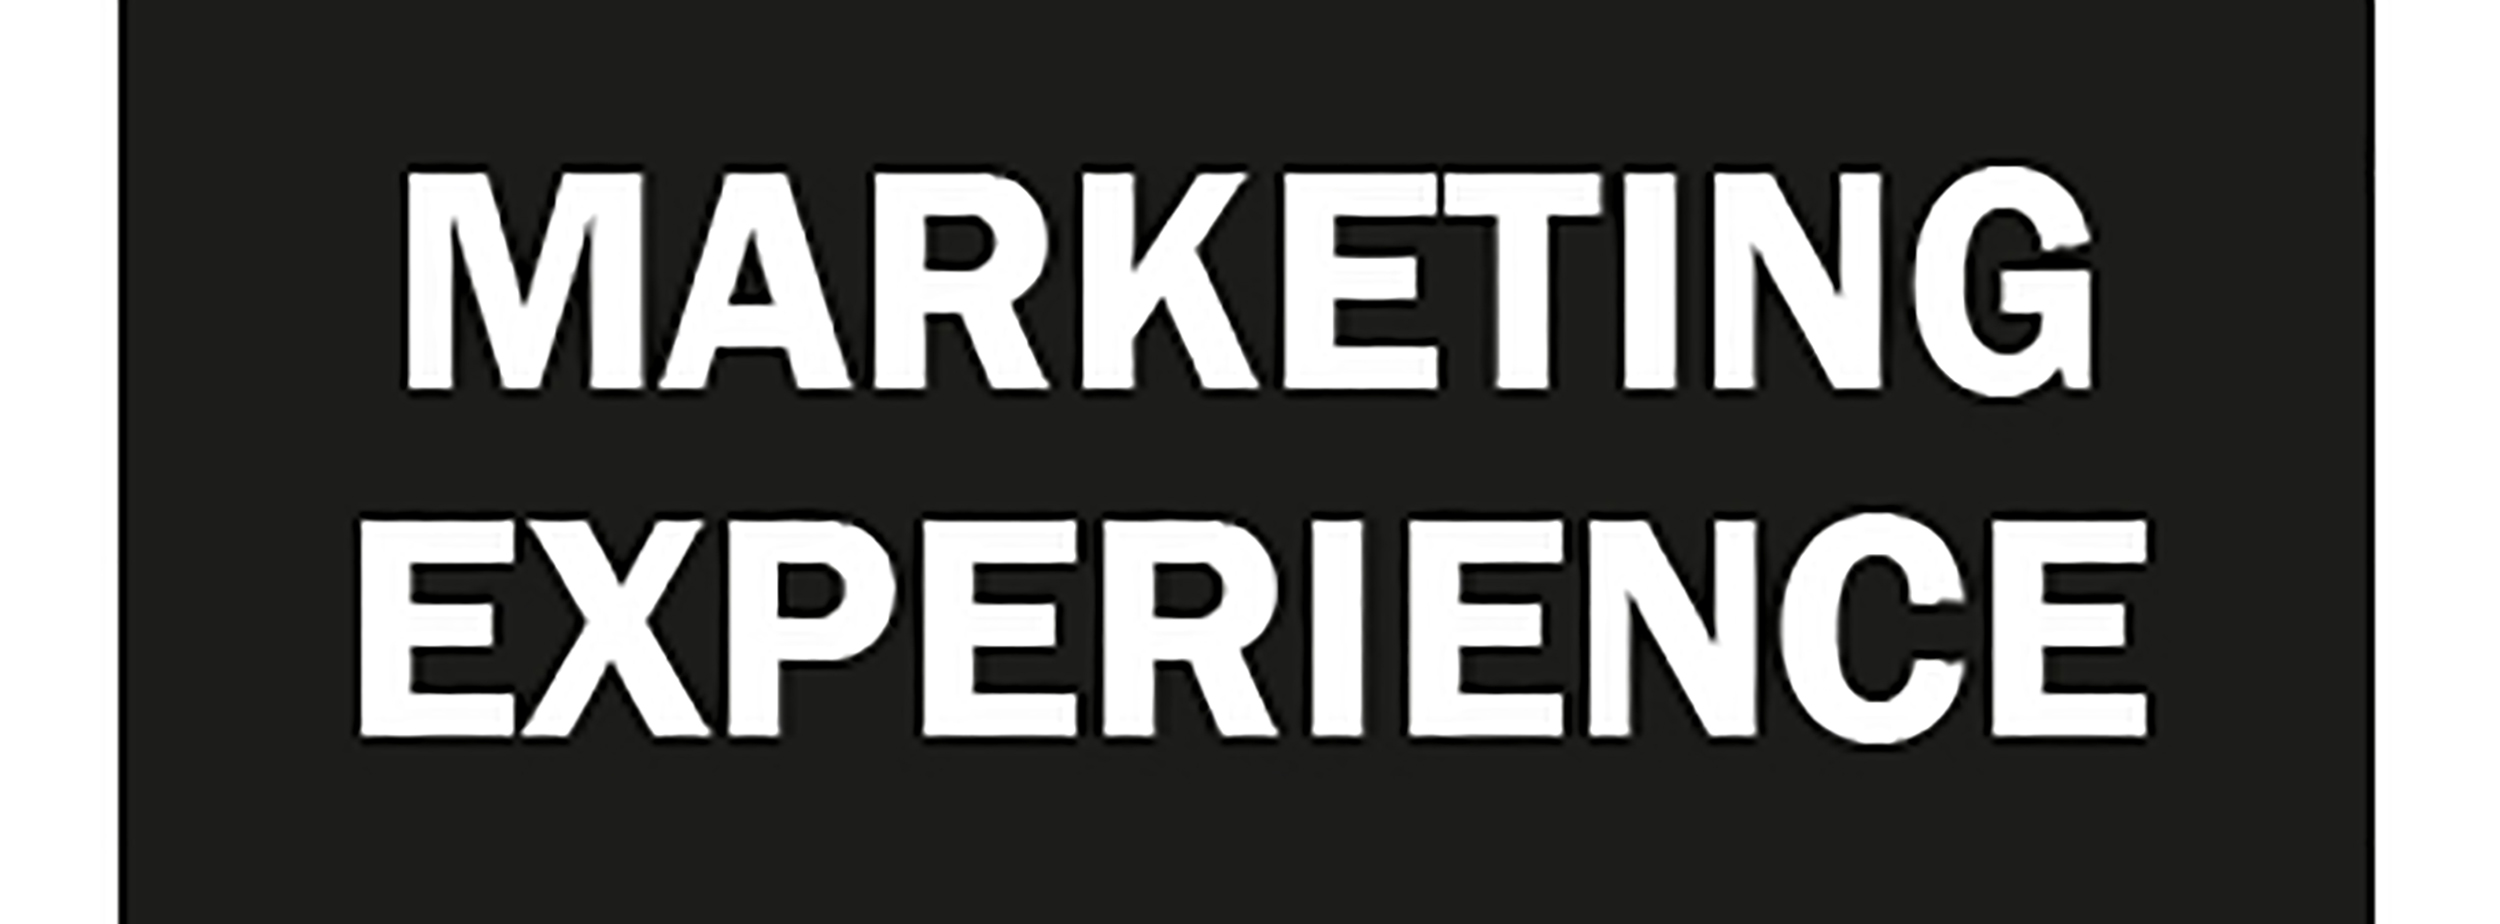 Marketing Experience BUTTON.jpg